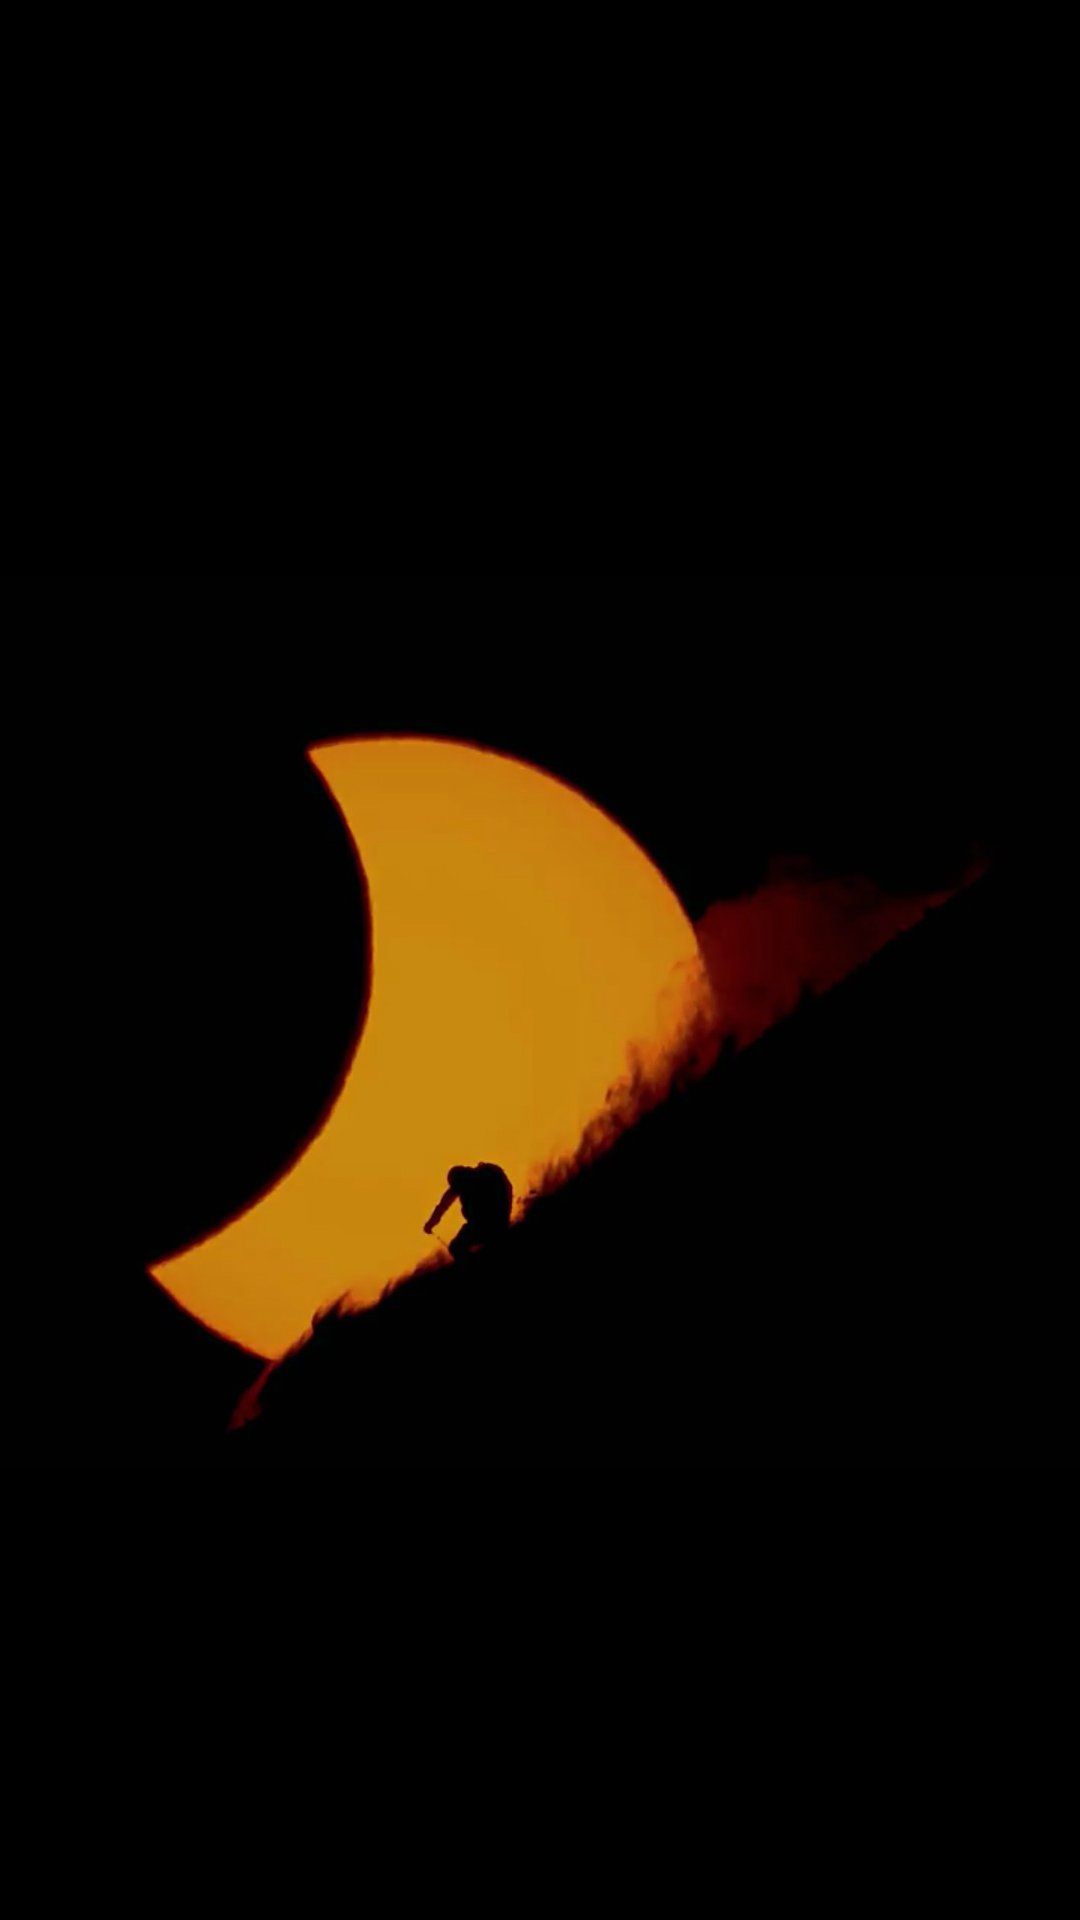 iPhone 6 wallpaper Ski shot during a solar eclipse credit